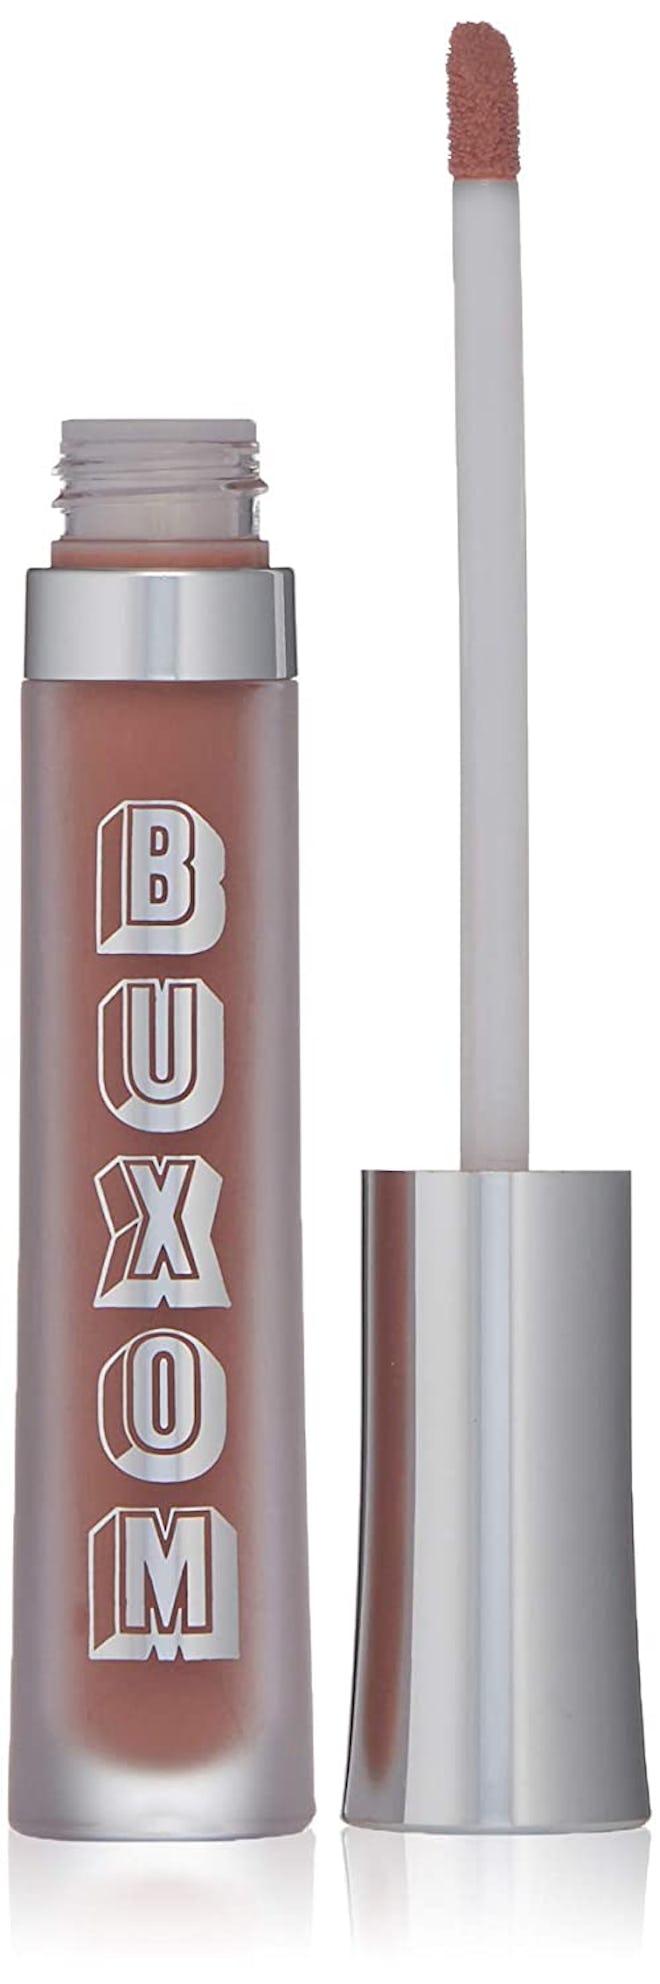 Buxom Full-On Plumping Lip Cream Gloss in Blushing Margarita